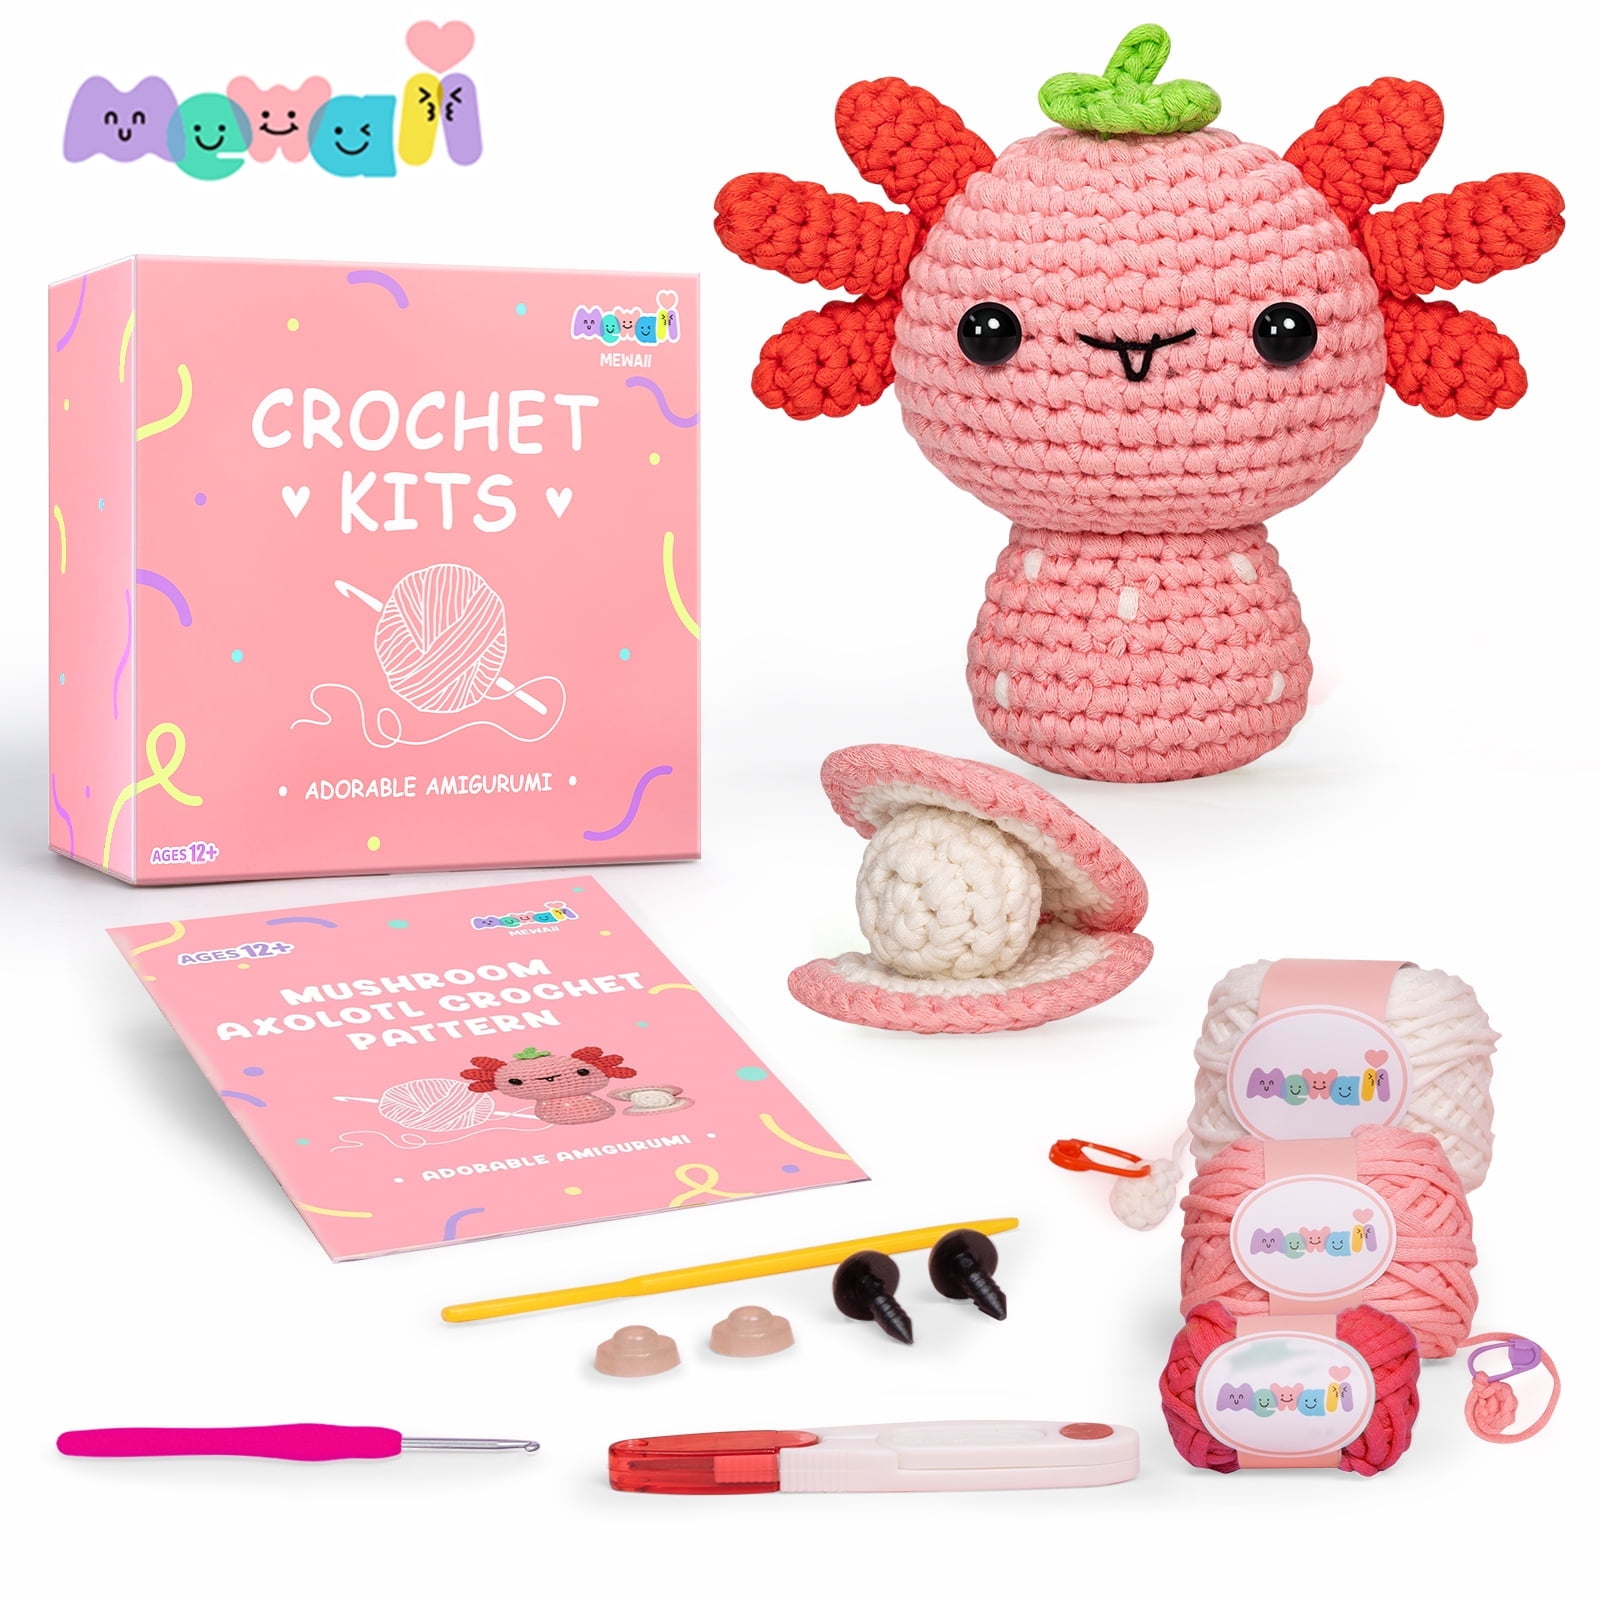 Mewaii Crochet Kit for Beginners with Tape Yarn, Complete DIY Knitting Kits, Animal Crochet Set( Axolotl), Size: 4.7, White